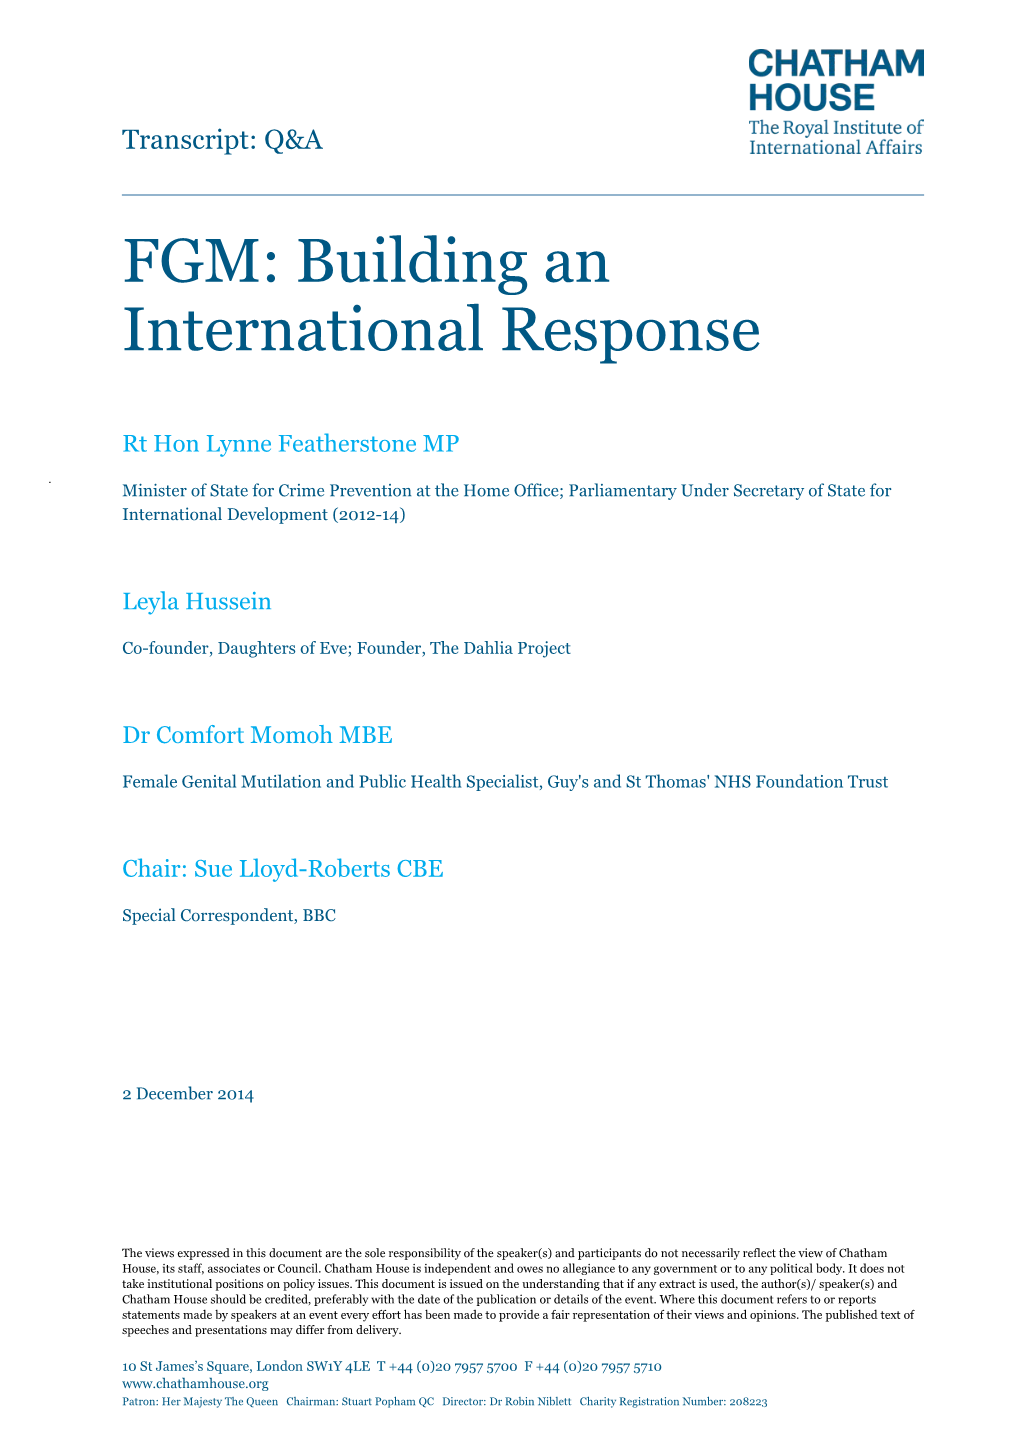 FGM: Building an International Response